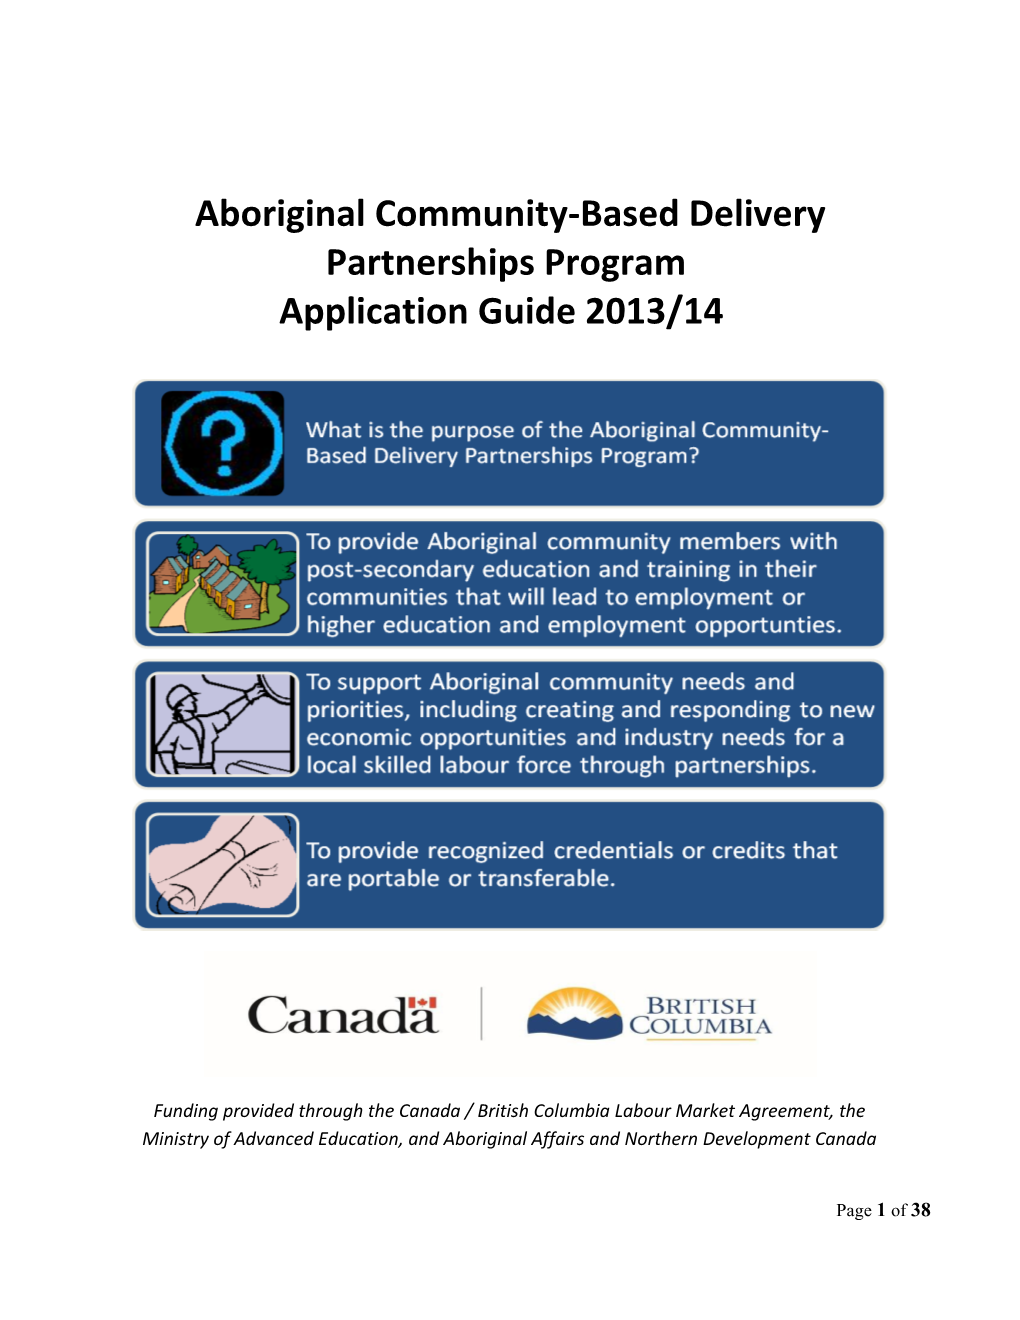 Aboriginal Community-Based Delivery Partnerships Program